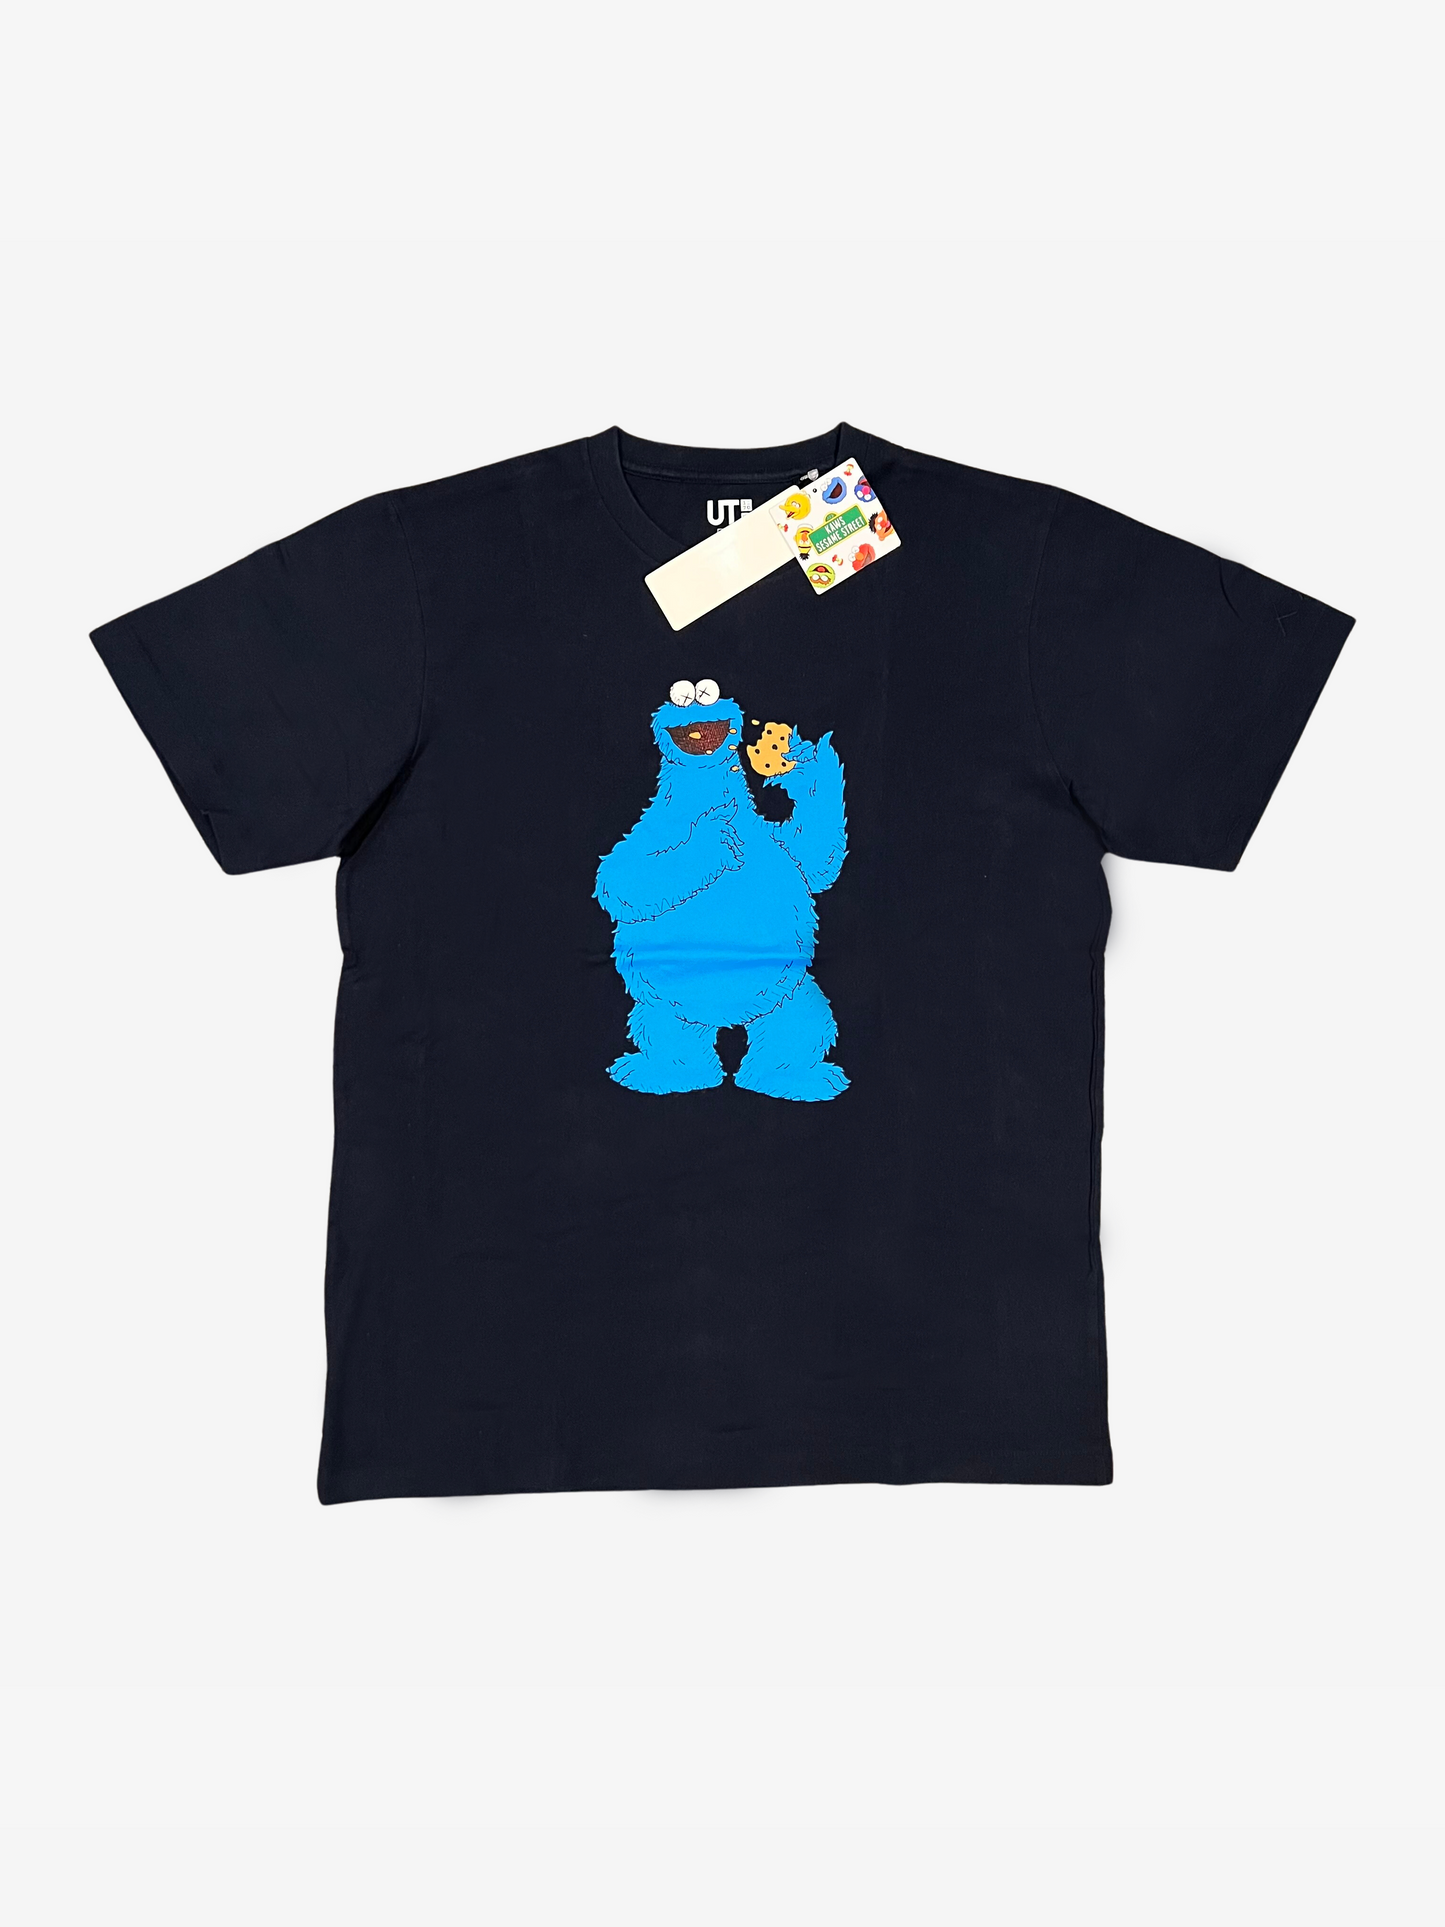 x Uniqlo x Sesame Street Navy Cookie Monster T-Shirt